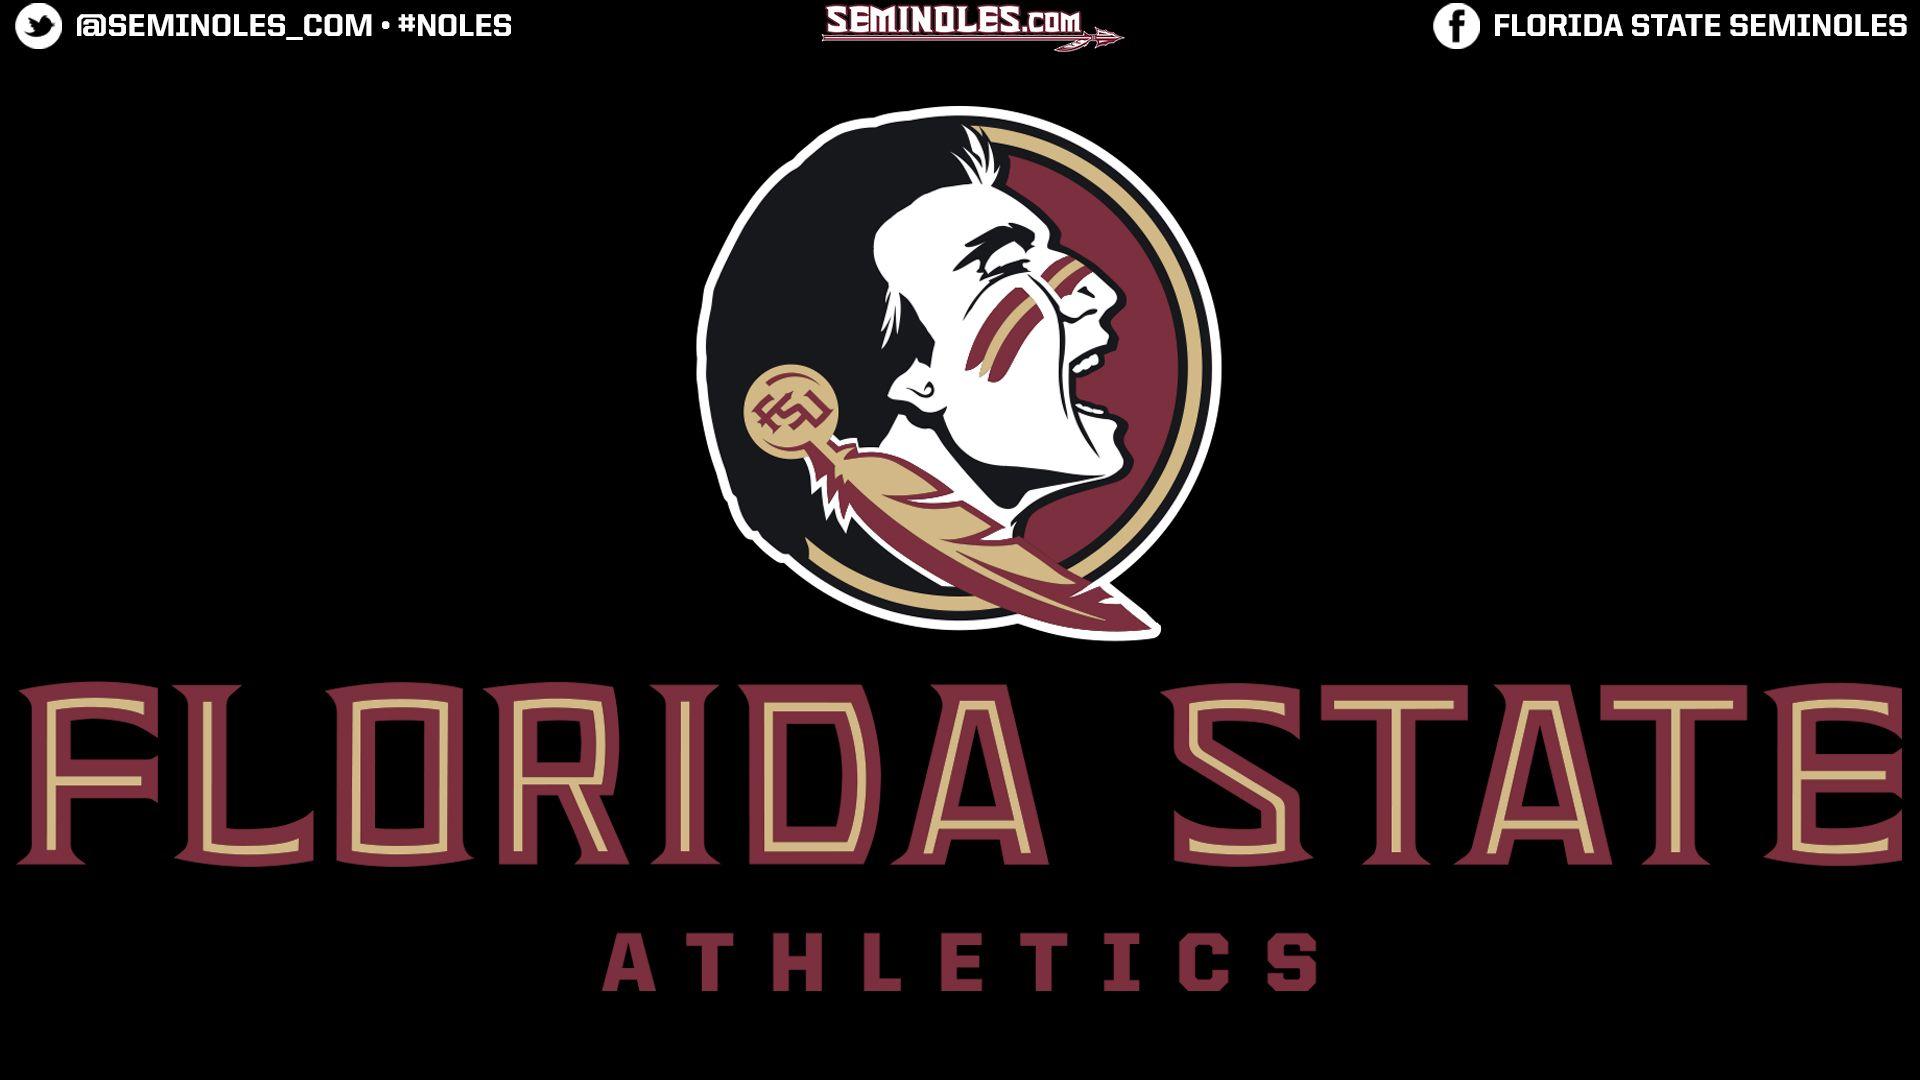 Florida State University Football Logo - Seminoles.com Desktop Wallpapers